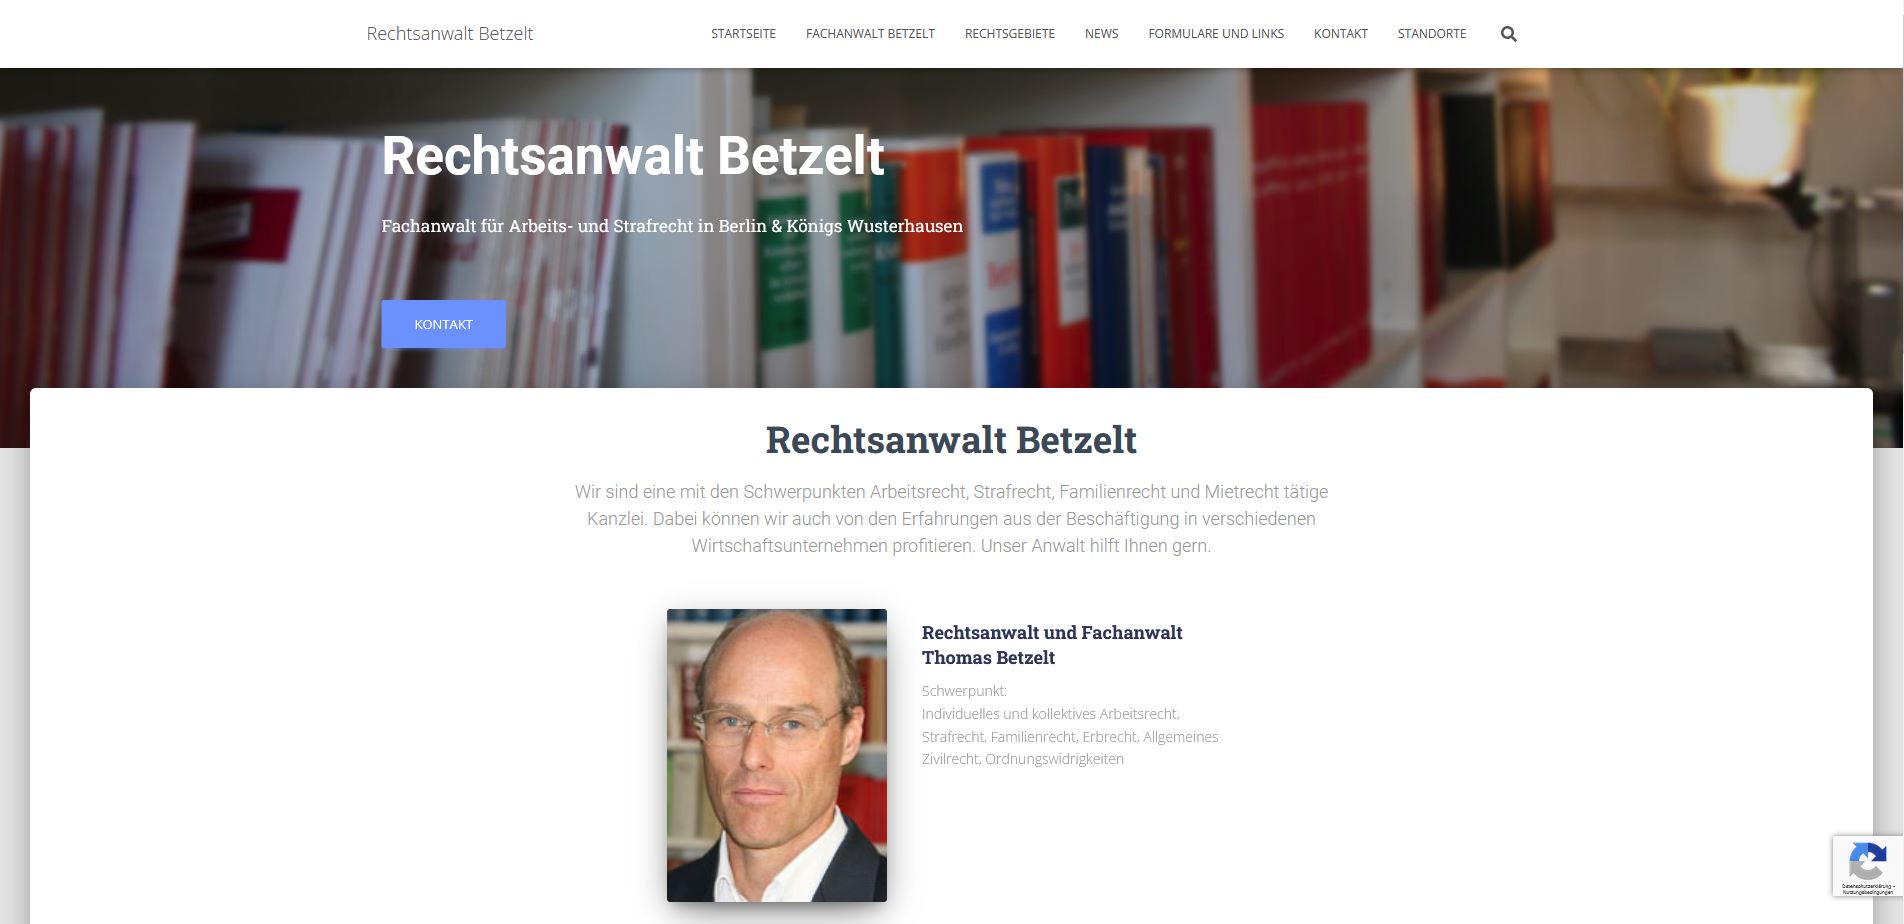 WEB Service Stephan Schulz